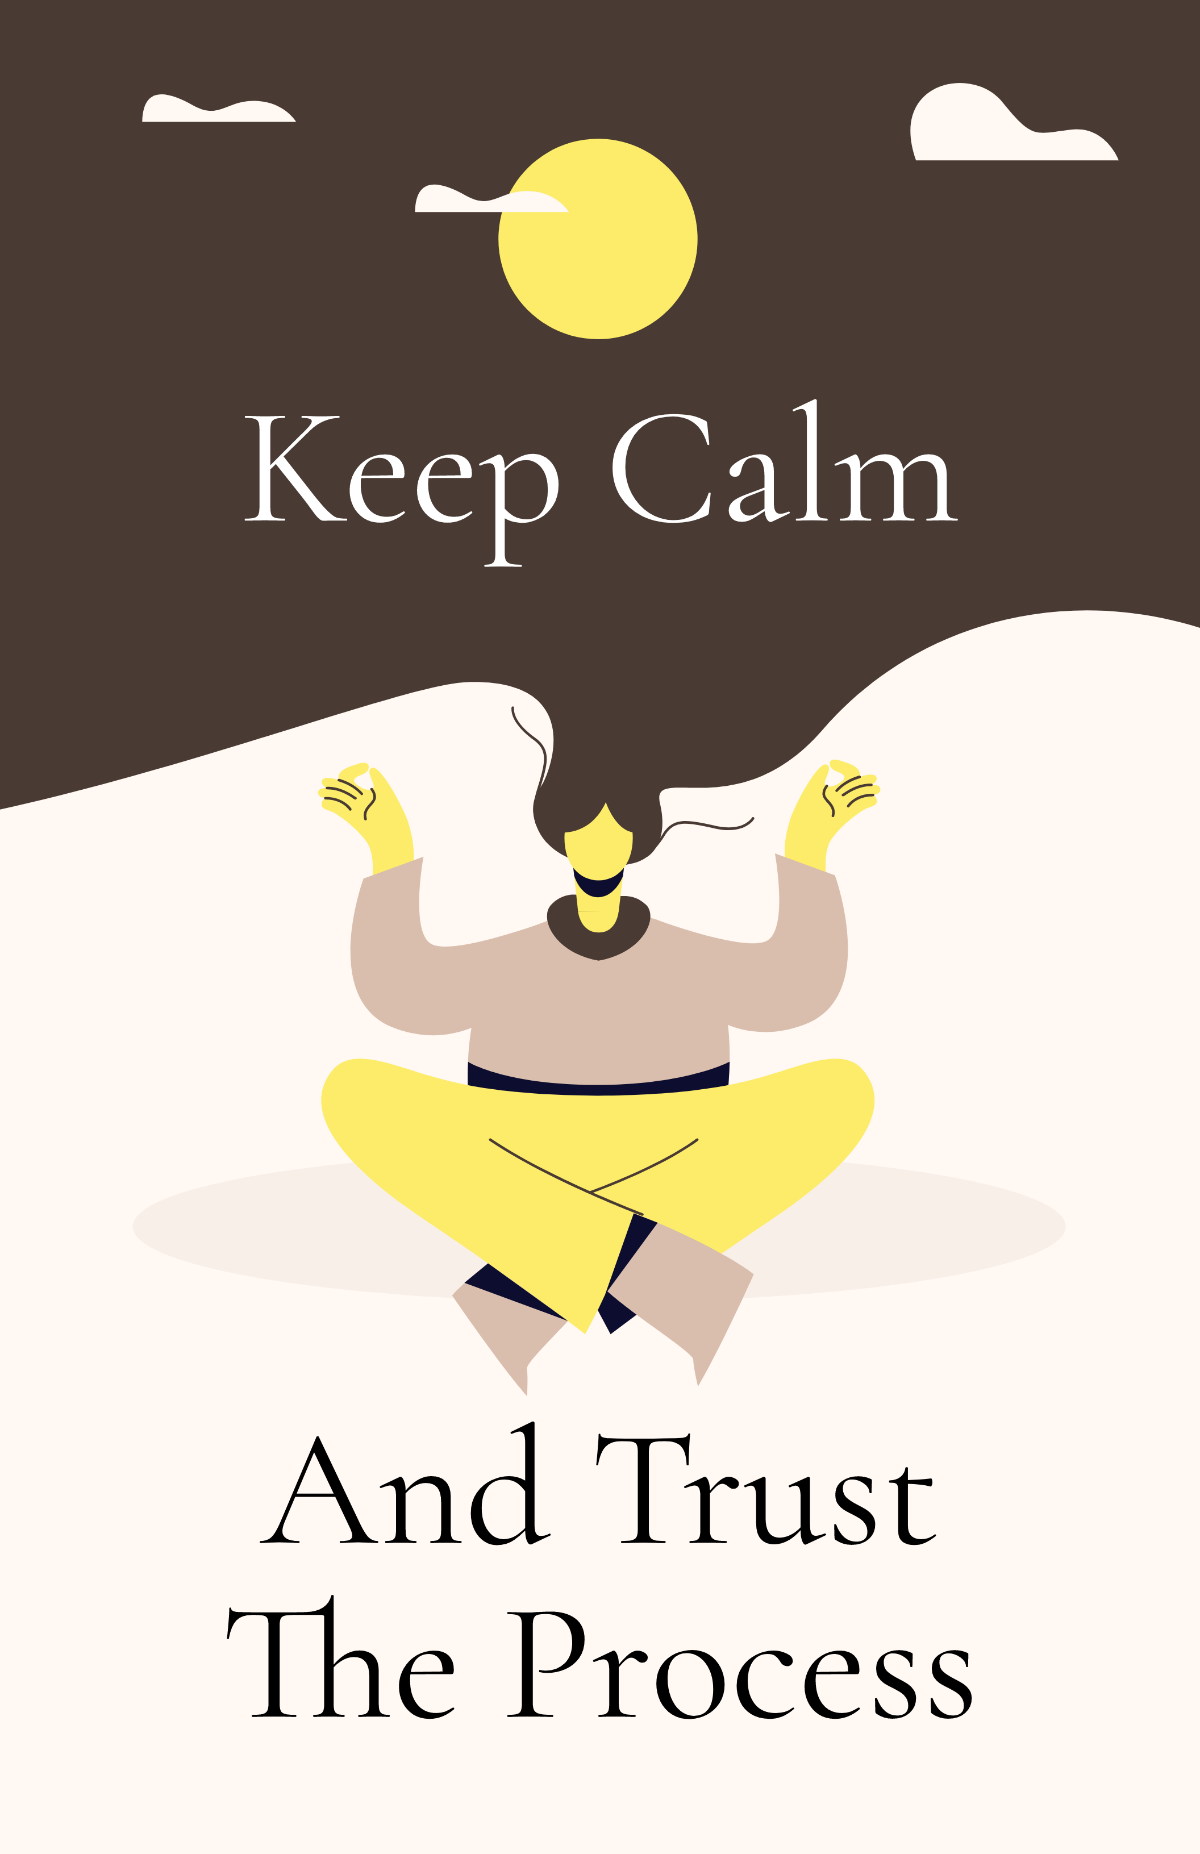 Free Keep Calm Motivational Poster Template